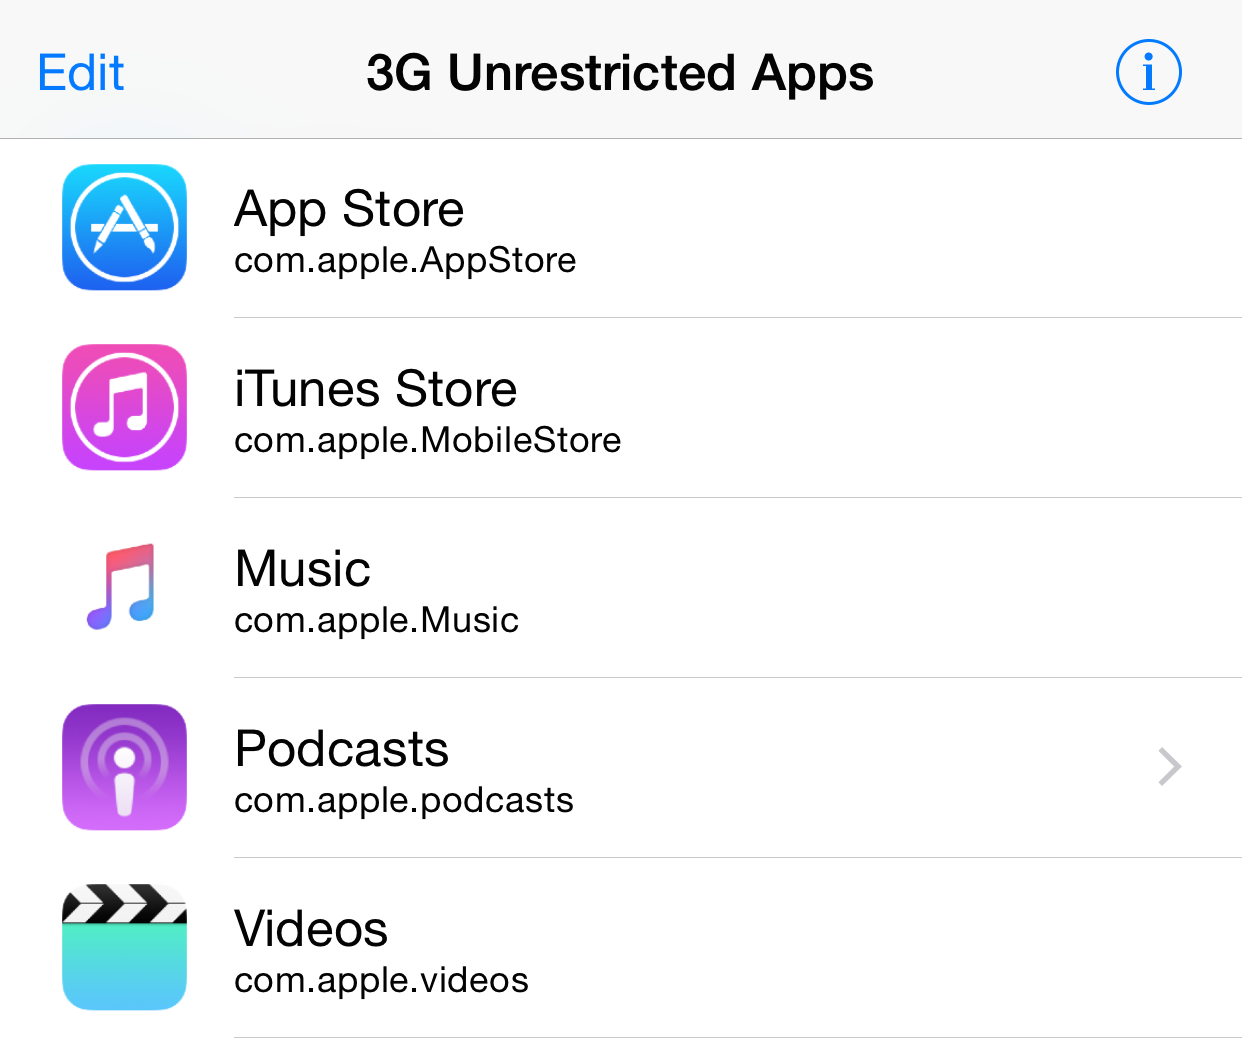 3G Unrestrictor Apple Music